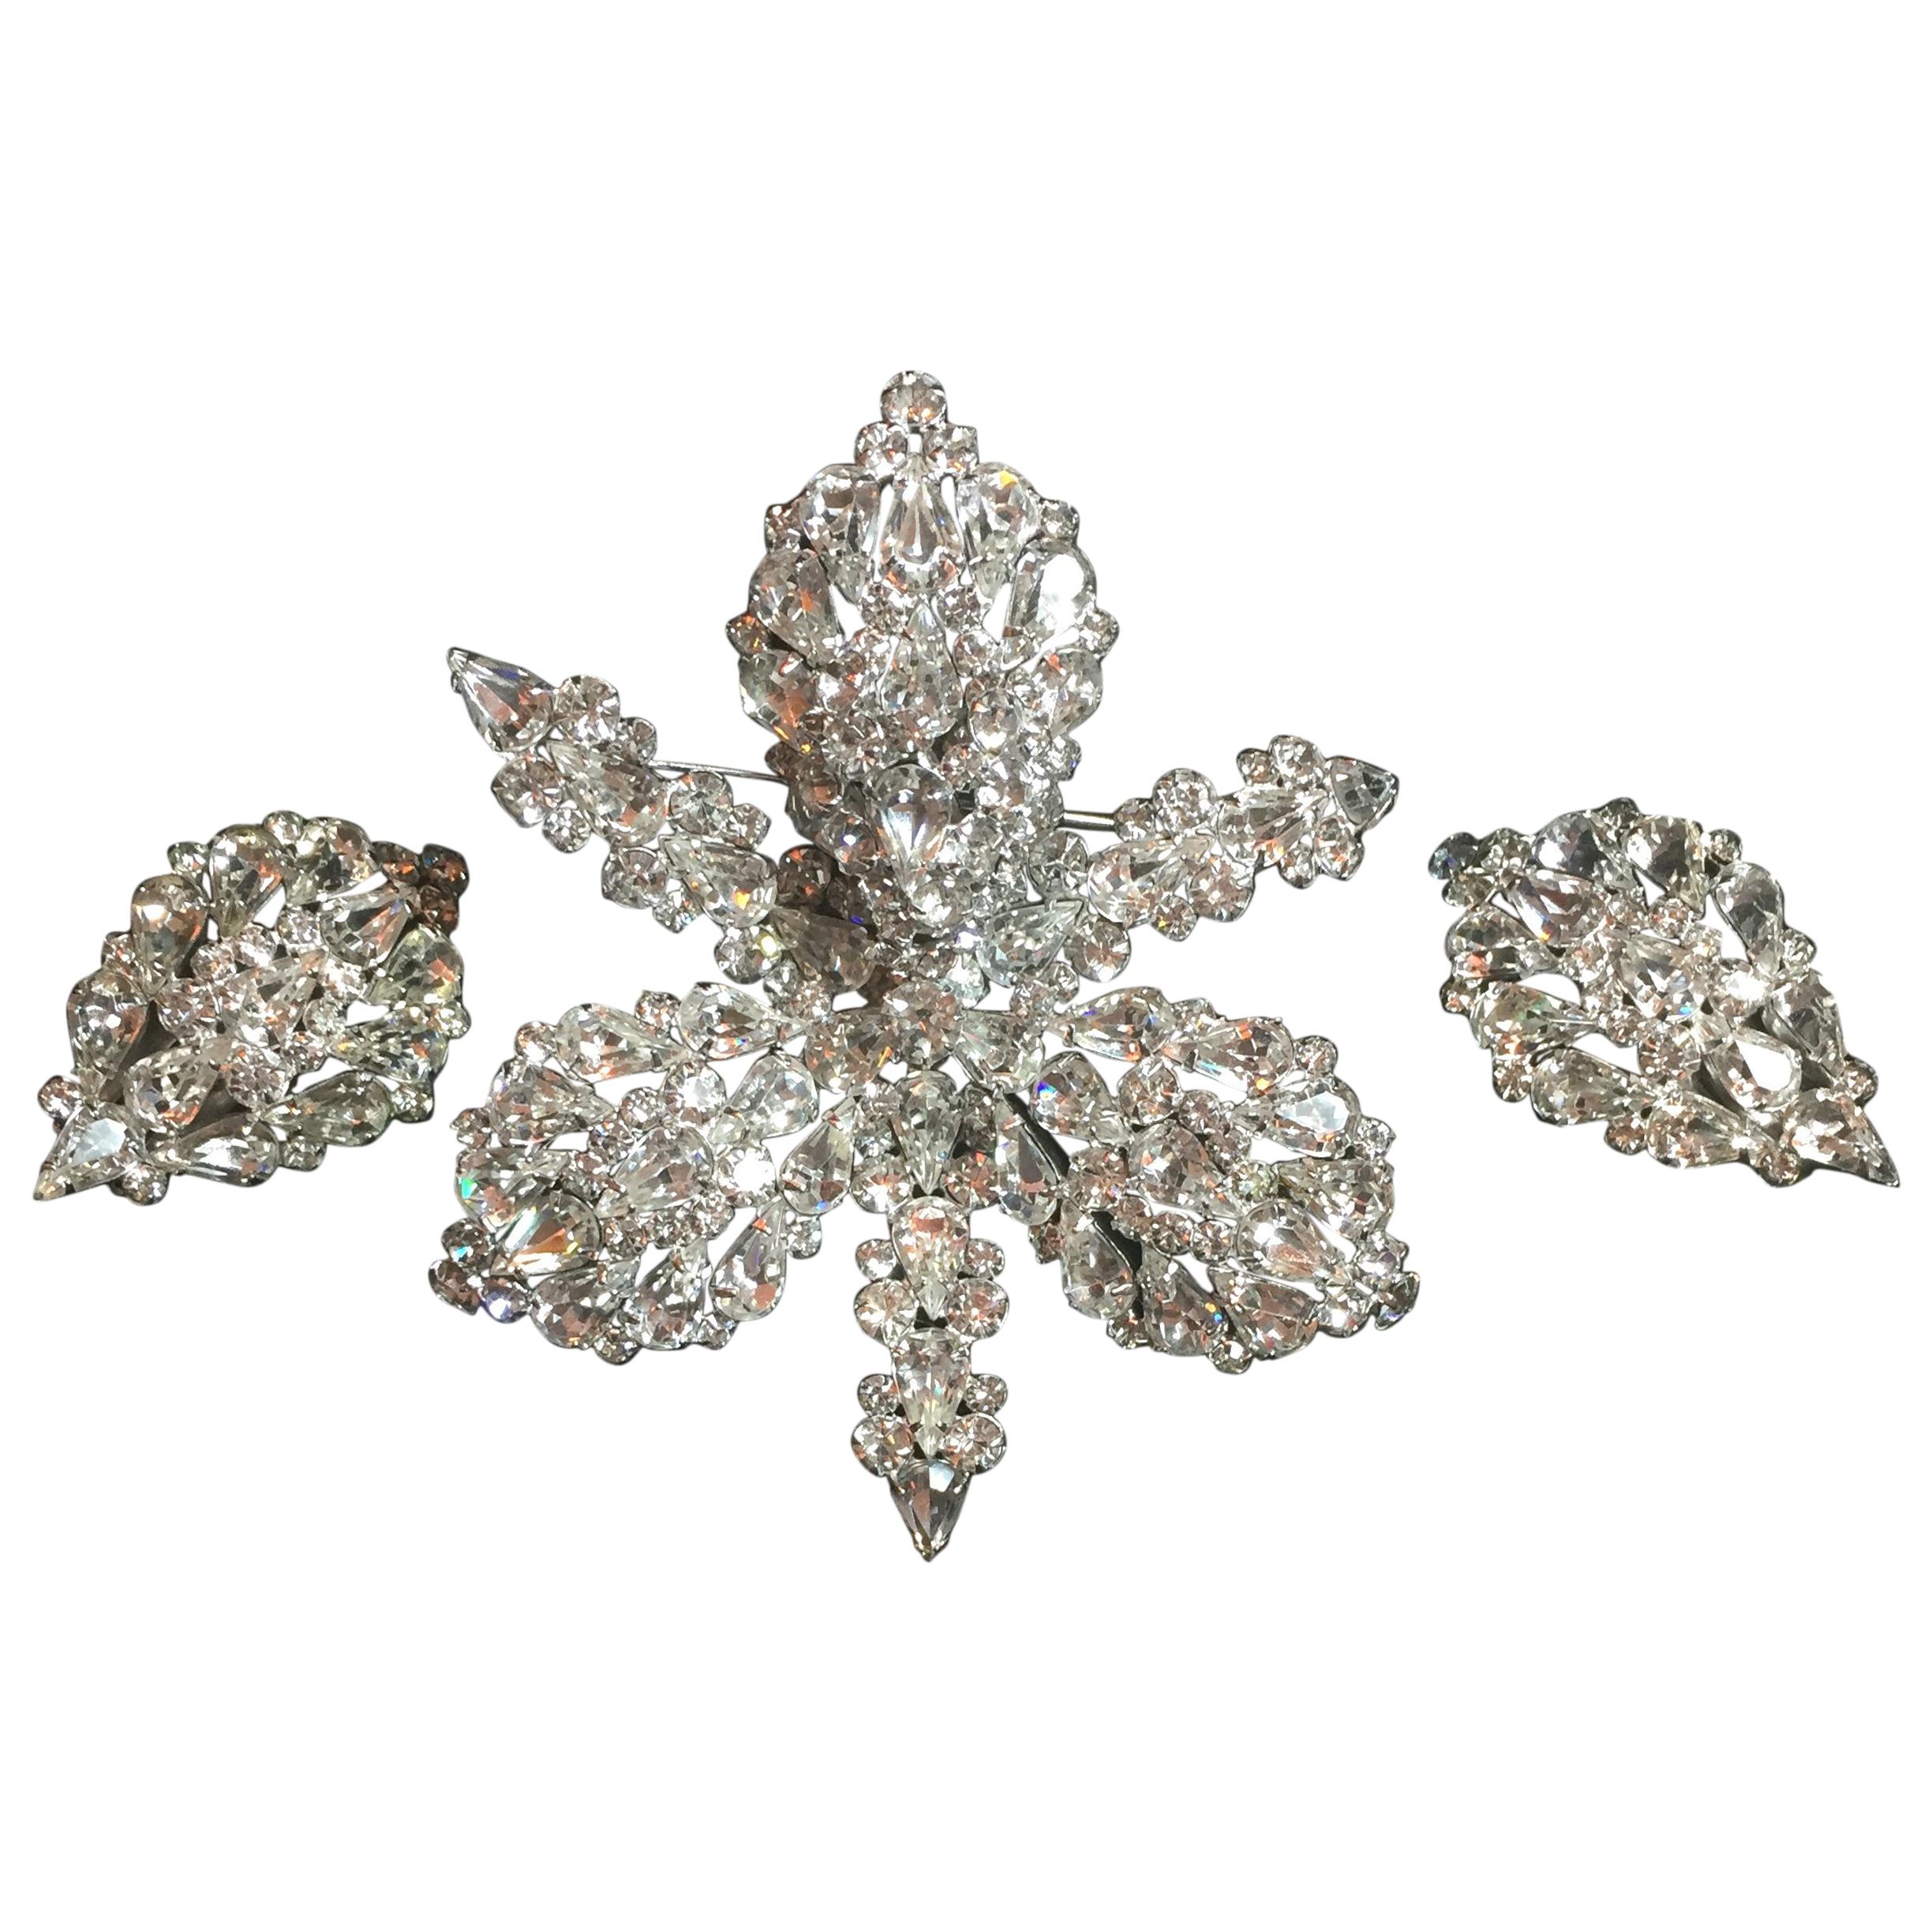 Massive Elsa Schiaparelli Crystal & Rhodium Orchid Brooch & Earrings, 1950s For Sale